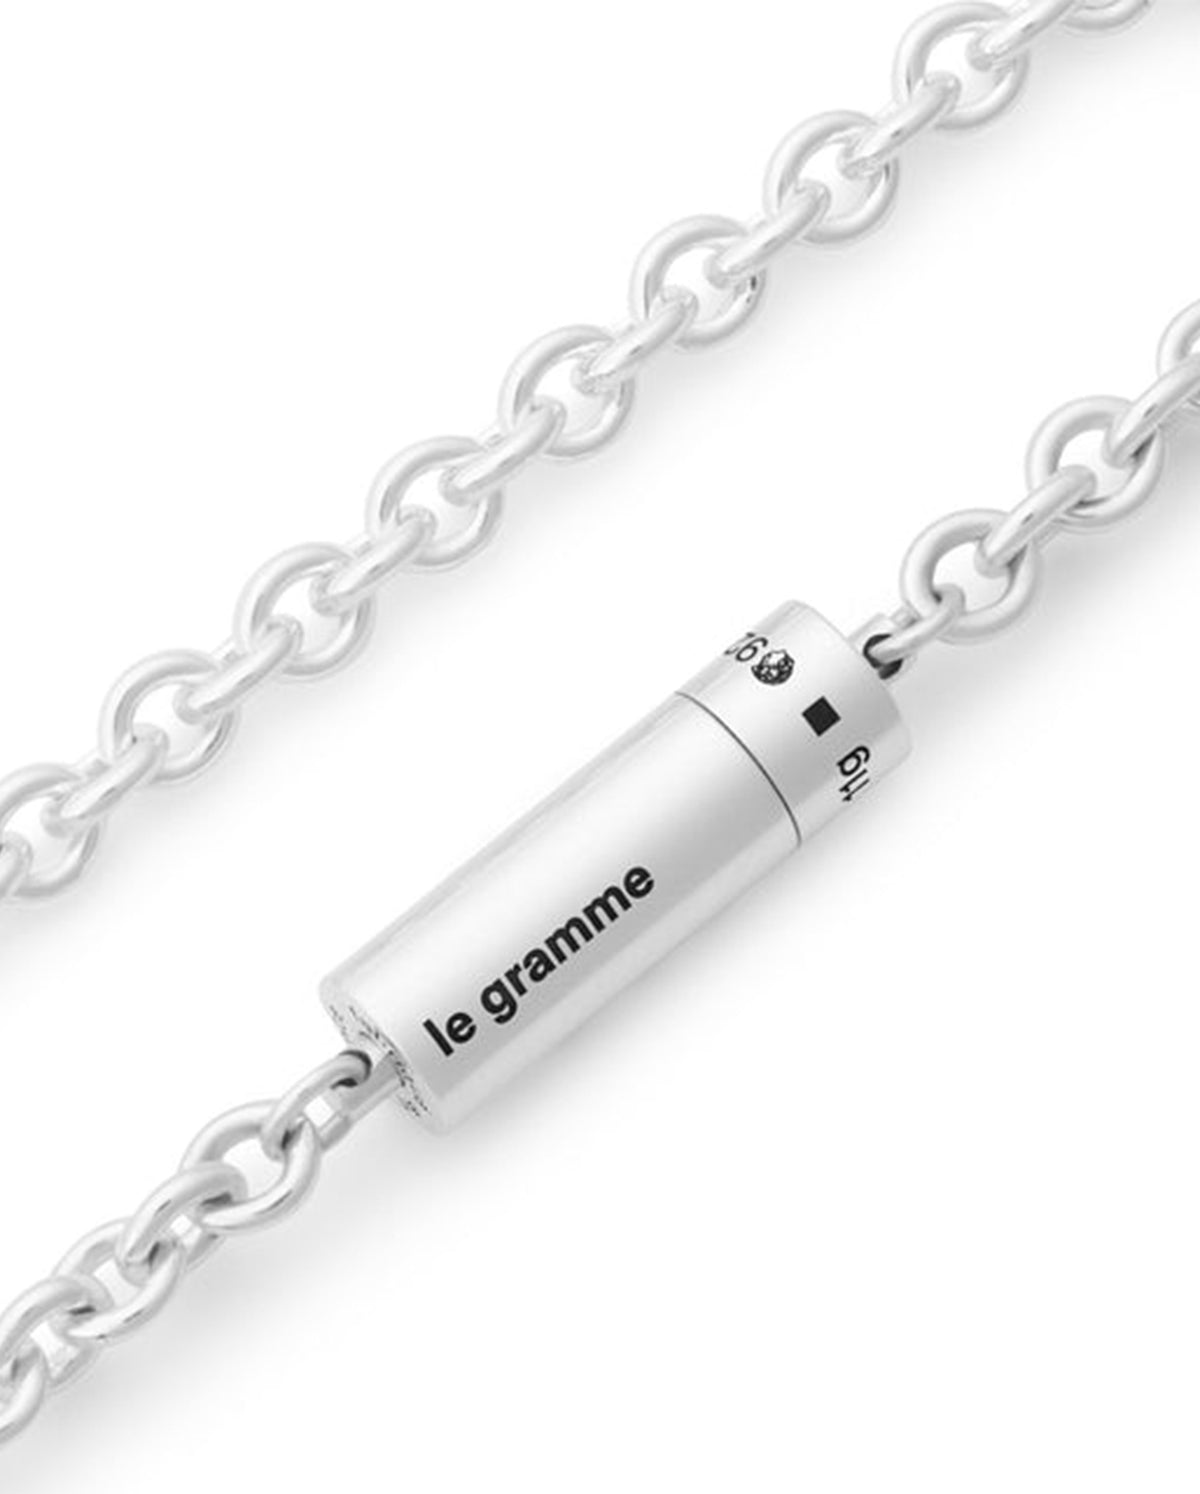 11G Chain Cable Bracelet - Silver